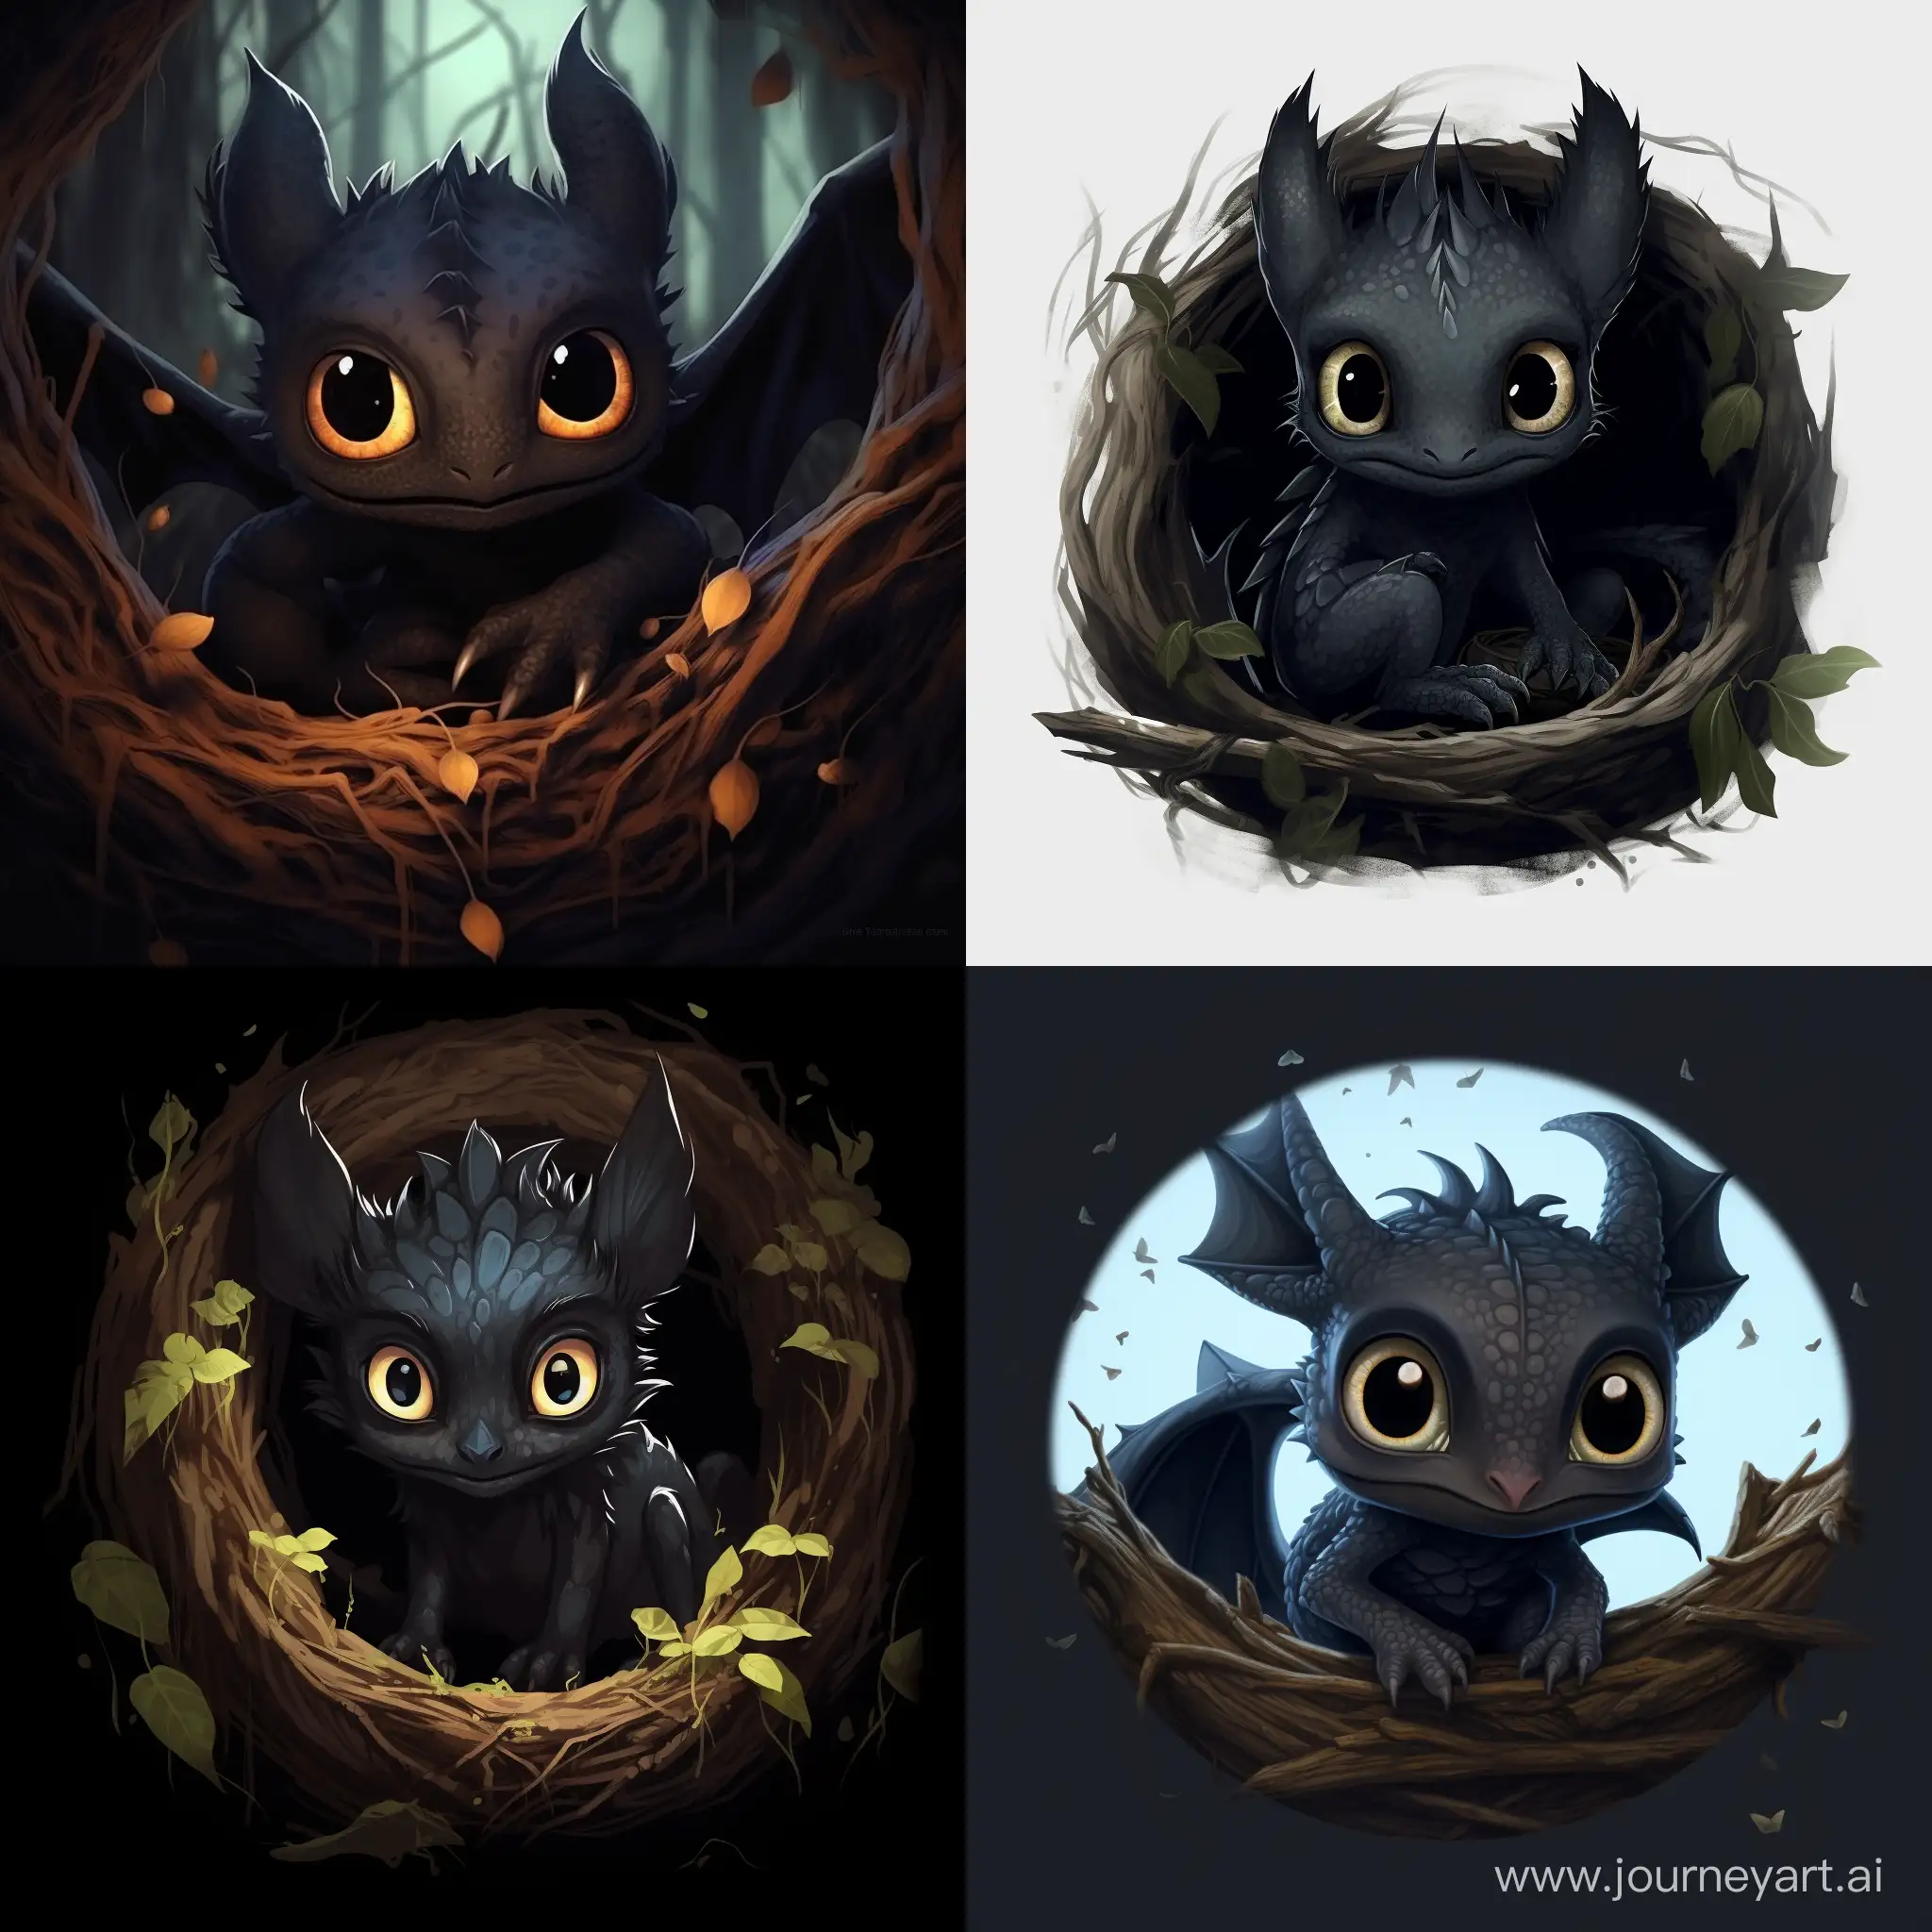 Adorable-Black-Dragon-Cub-Nestled-in-Dark-Surroundings